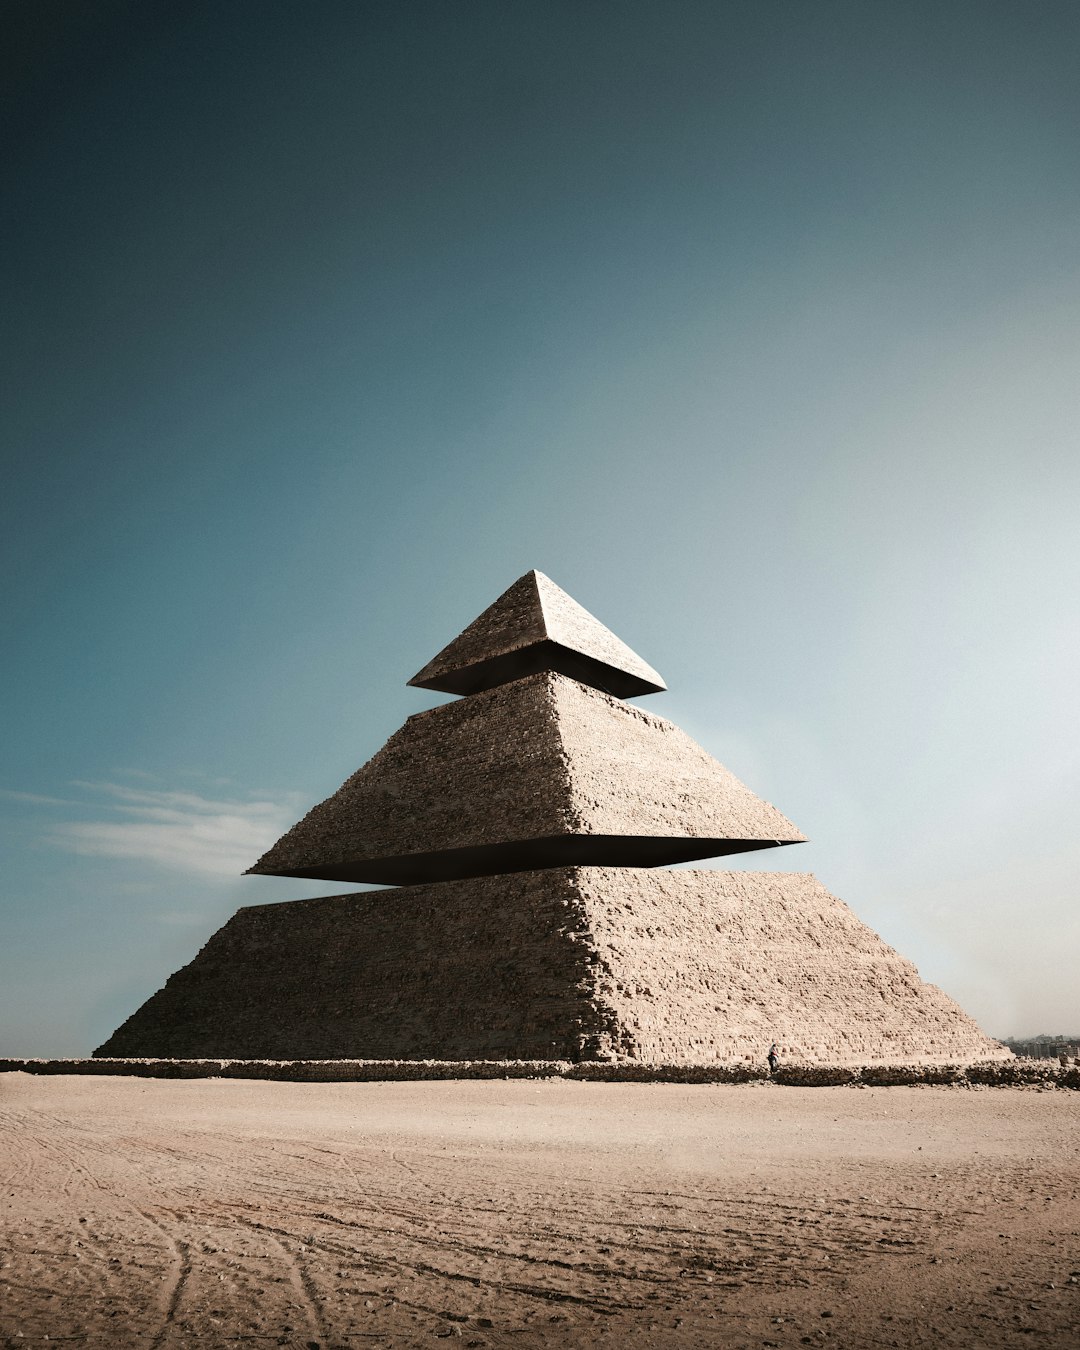 pyramid under blue sky during daytime